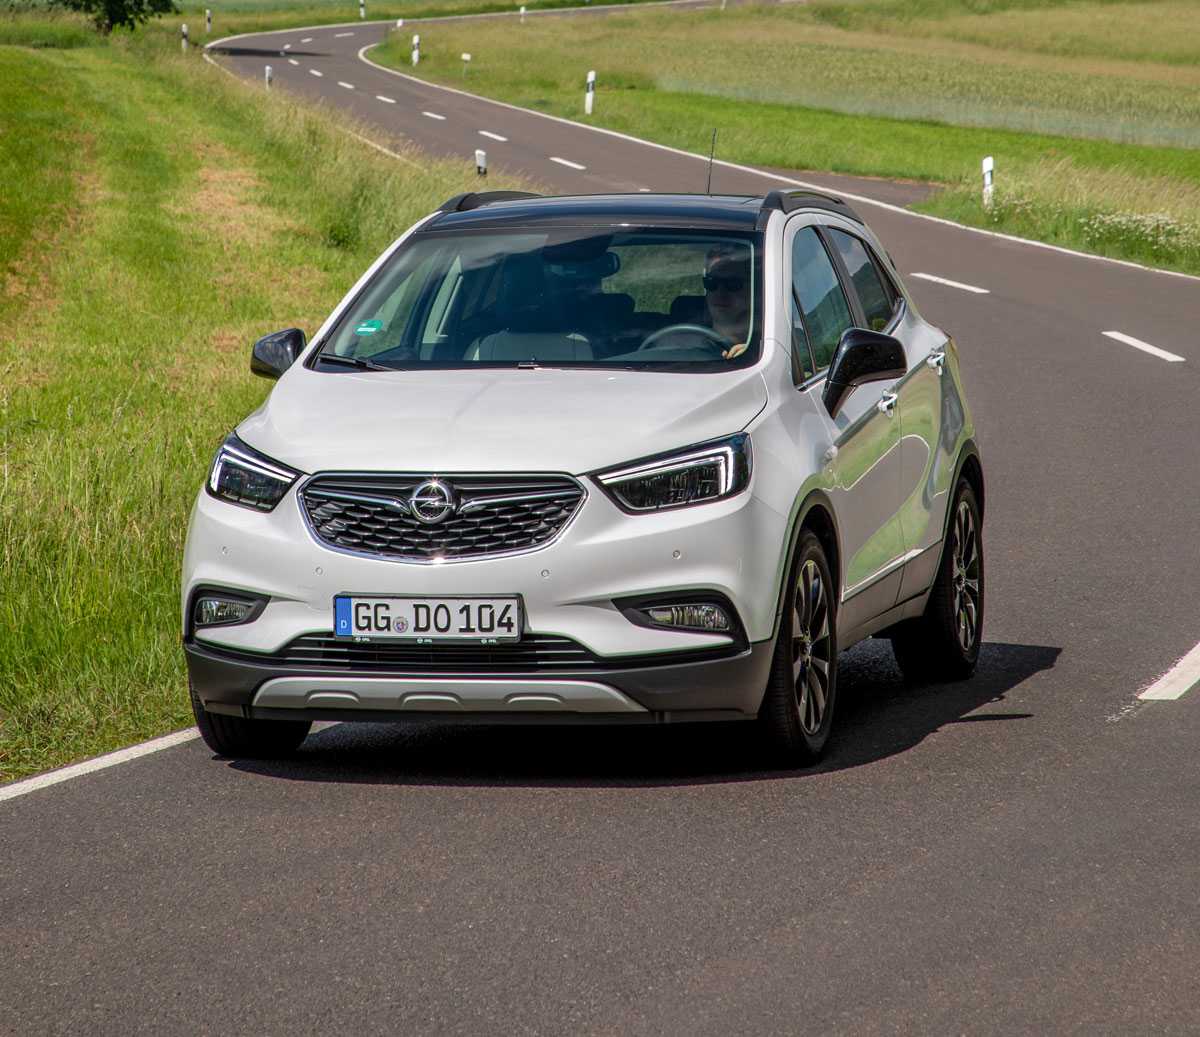 Opel mokka 1.4 turbo mt 4x4 enjoy (06.2012 - 08.2014) - технические характеристики